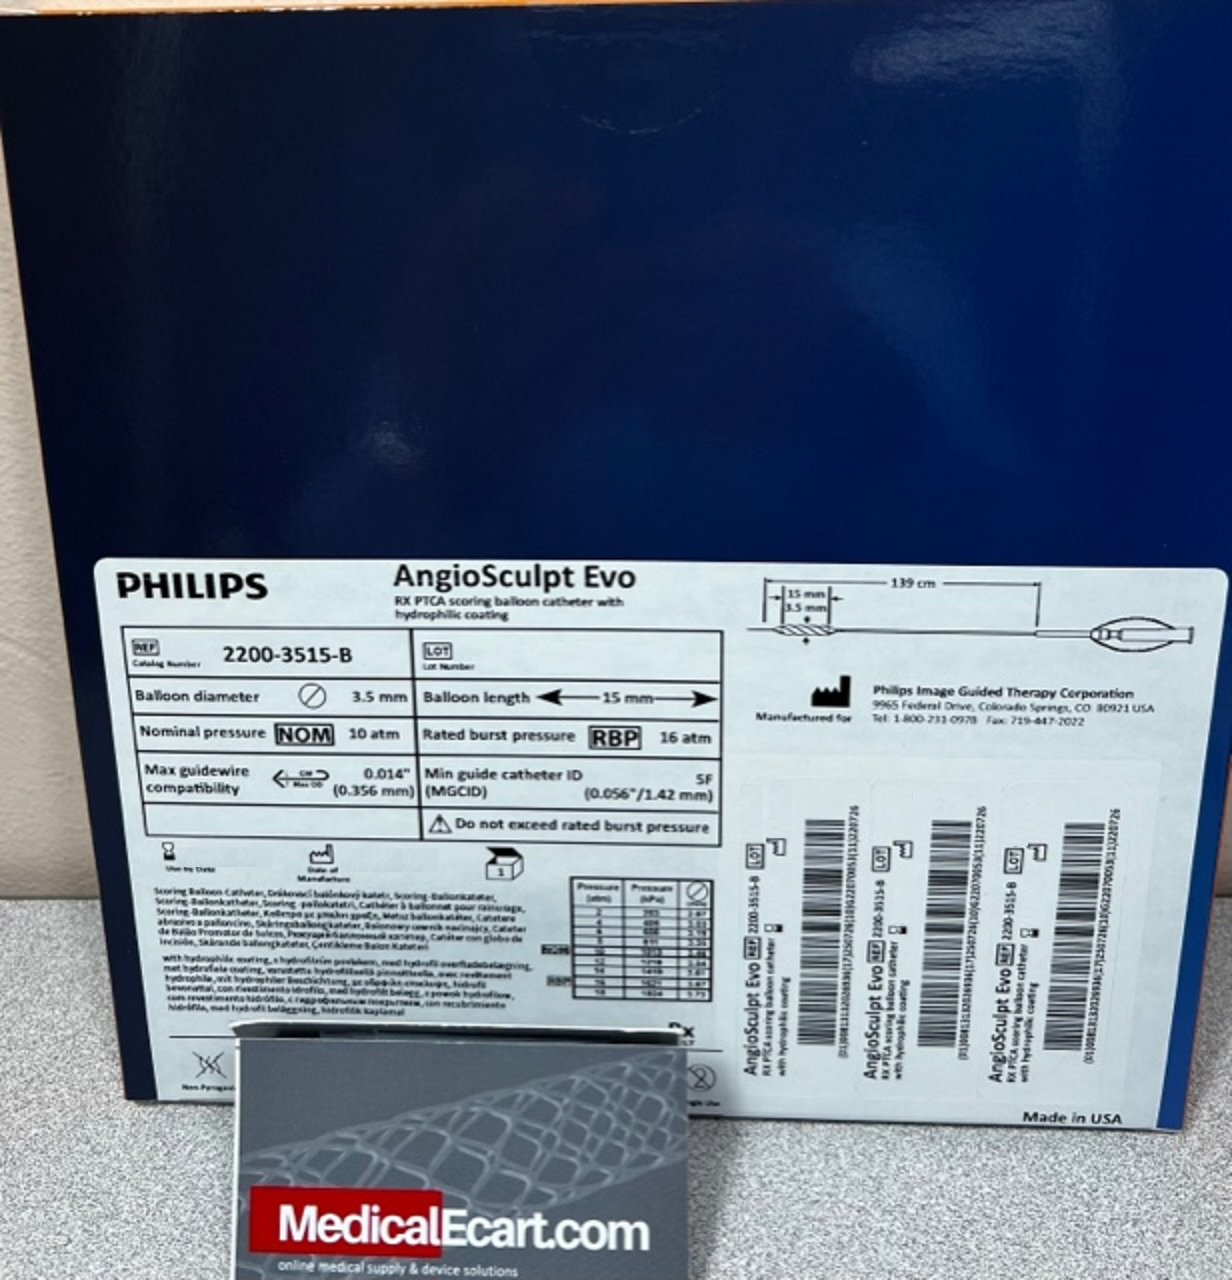 Philips 2200-3515-B AngioSculpt Evo RX PTA scoring Balloon Catheter